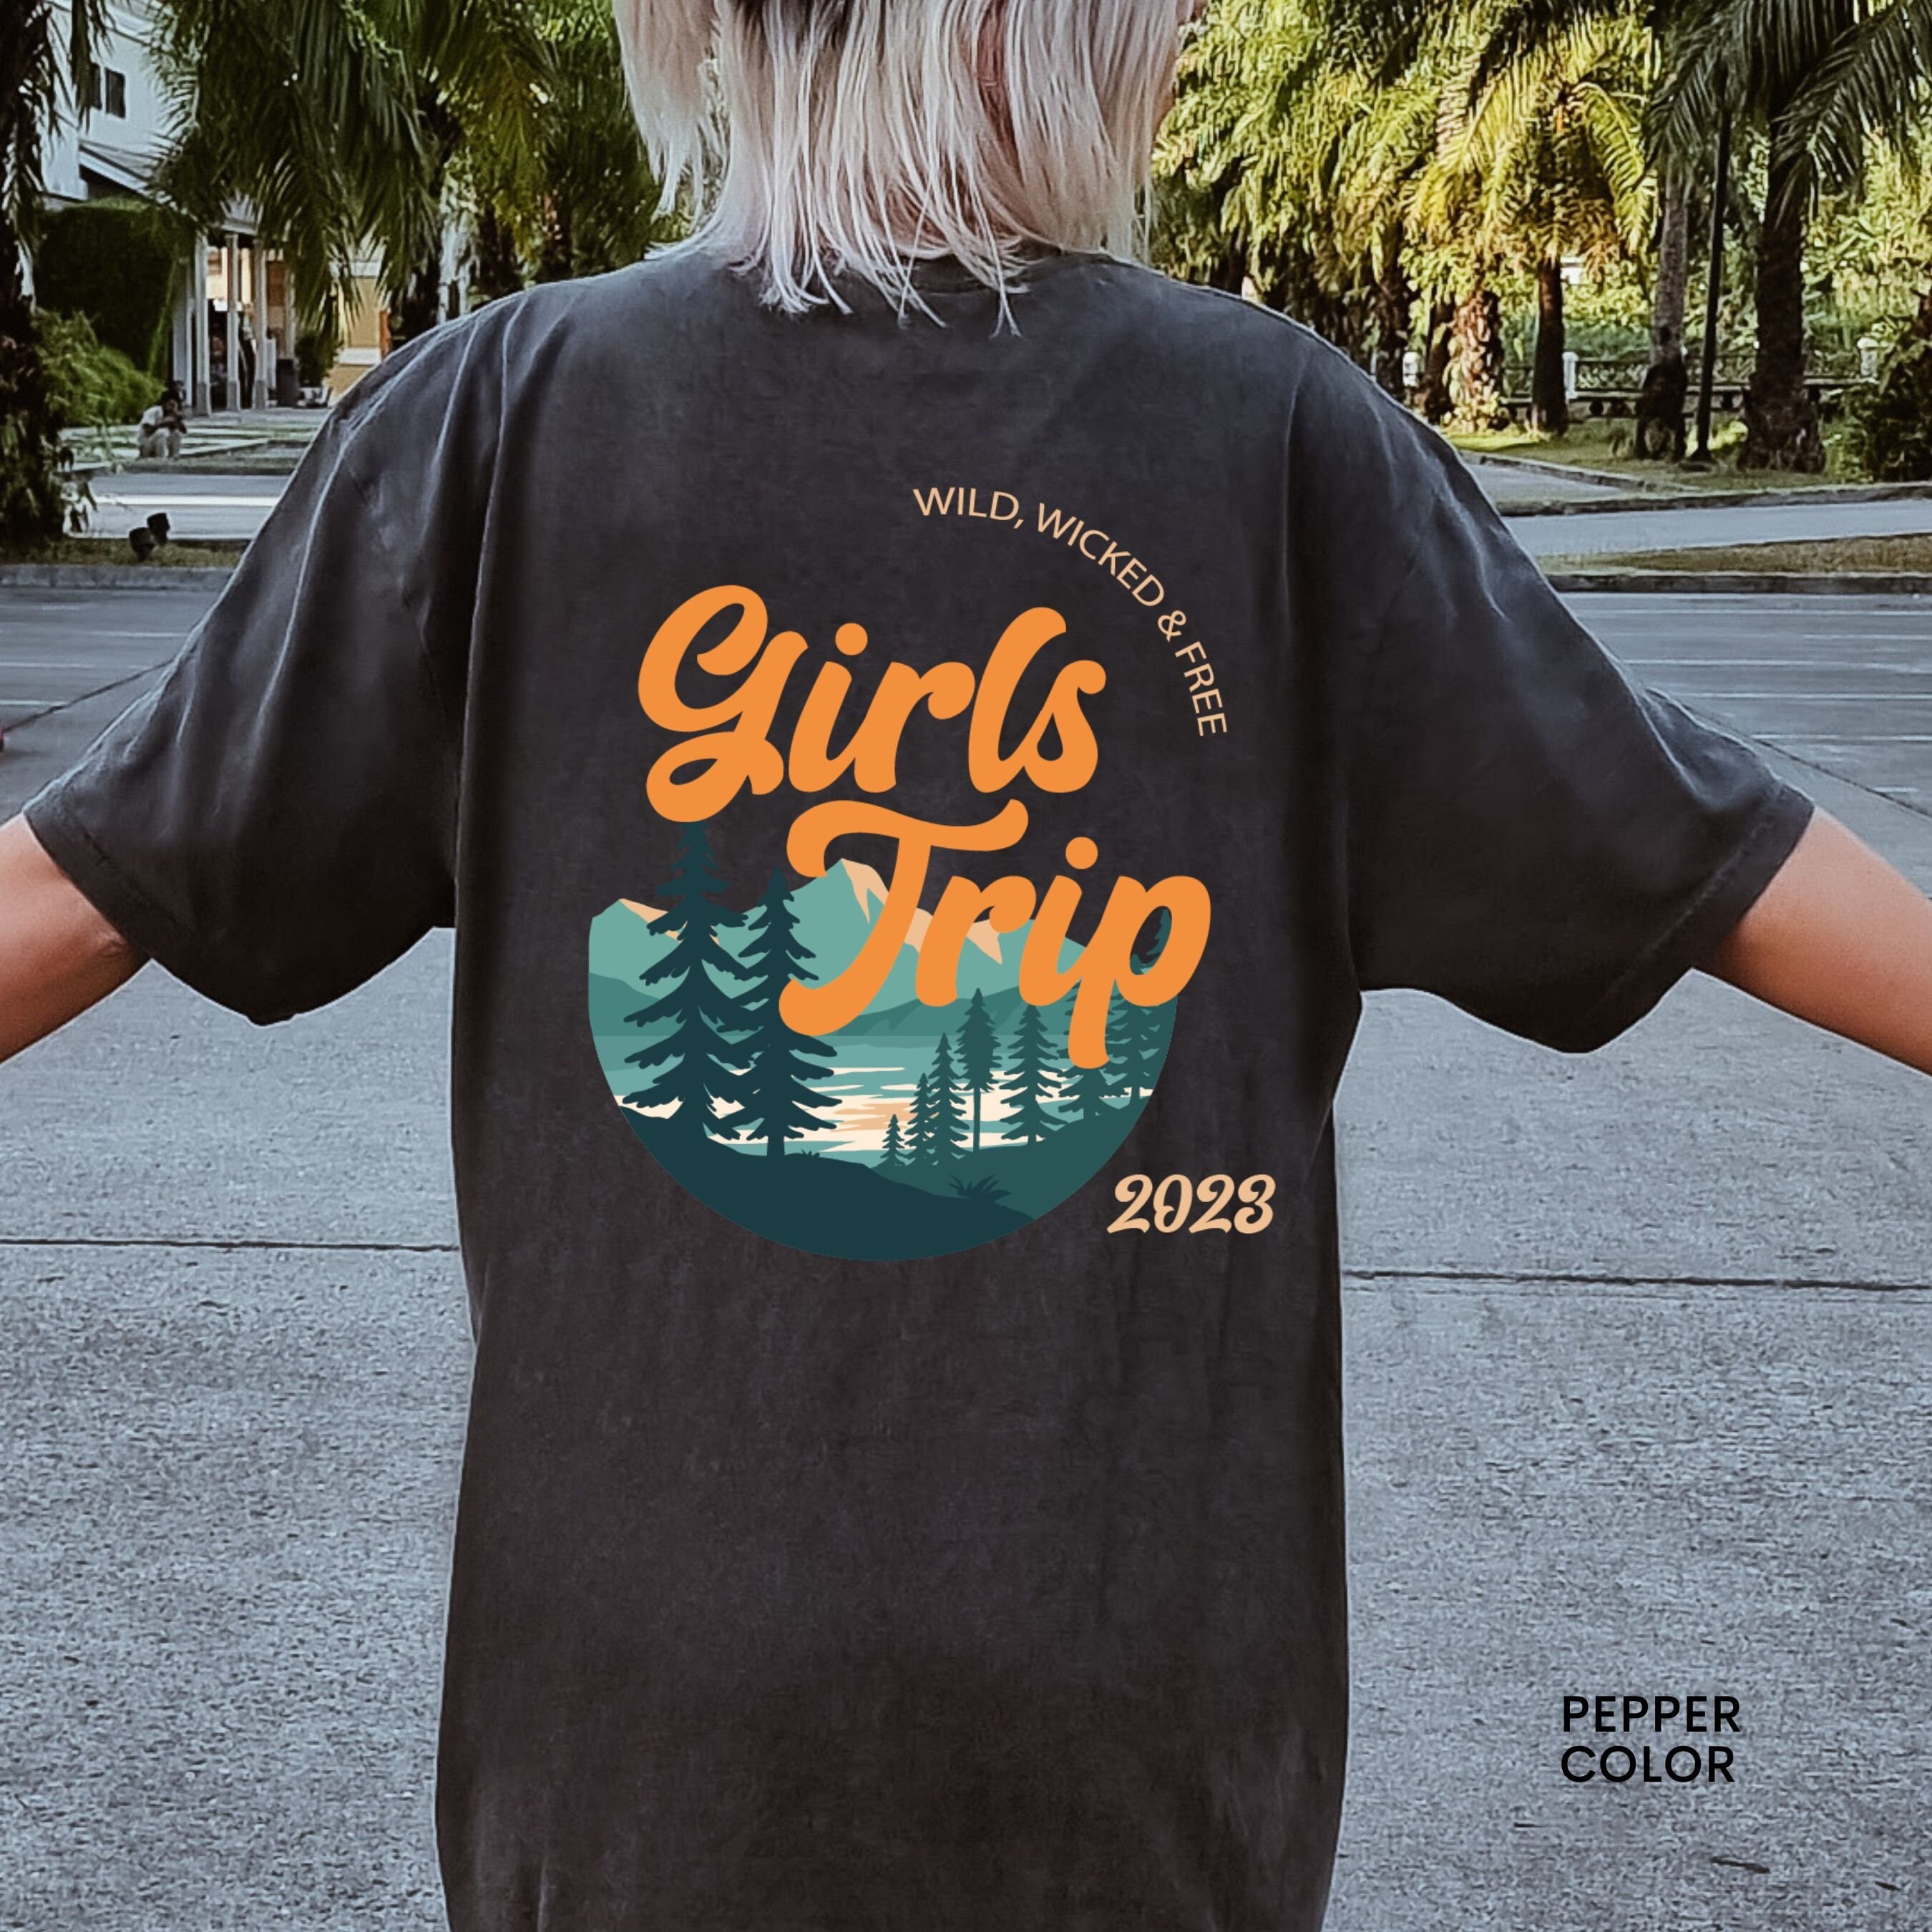 Hot Girls Love My Swag Graphic Funny Shirt Gift Joke T - Portugal, slither  io não carrega 